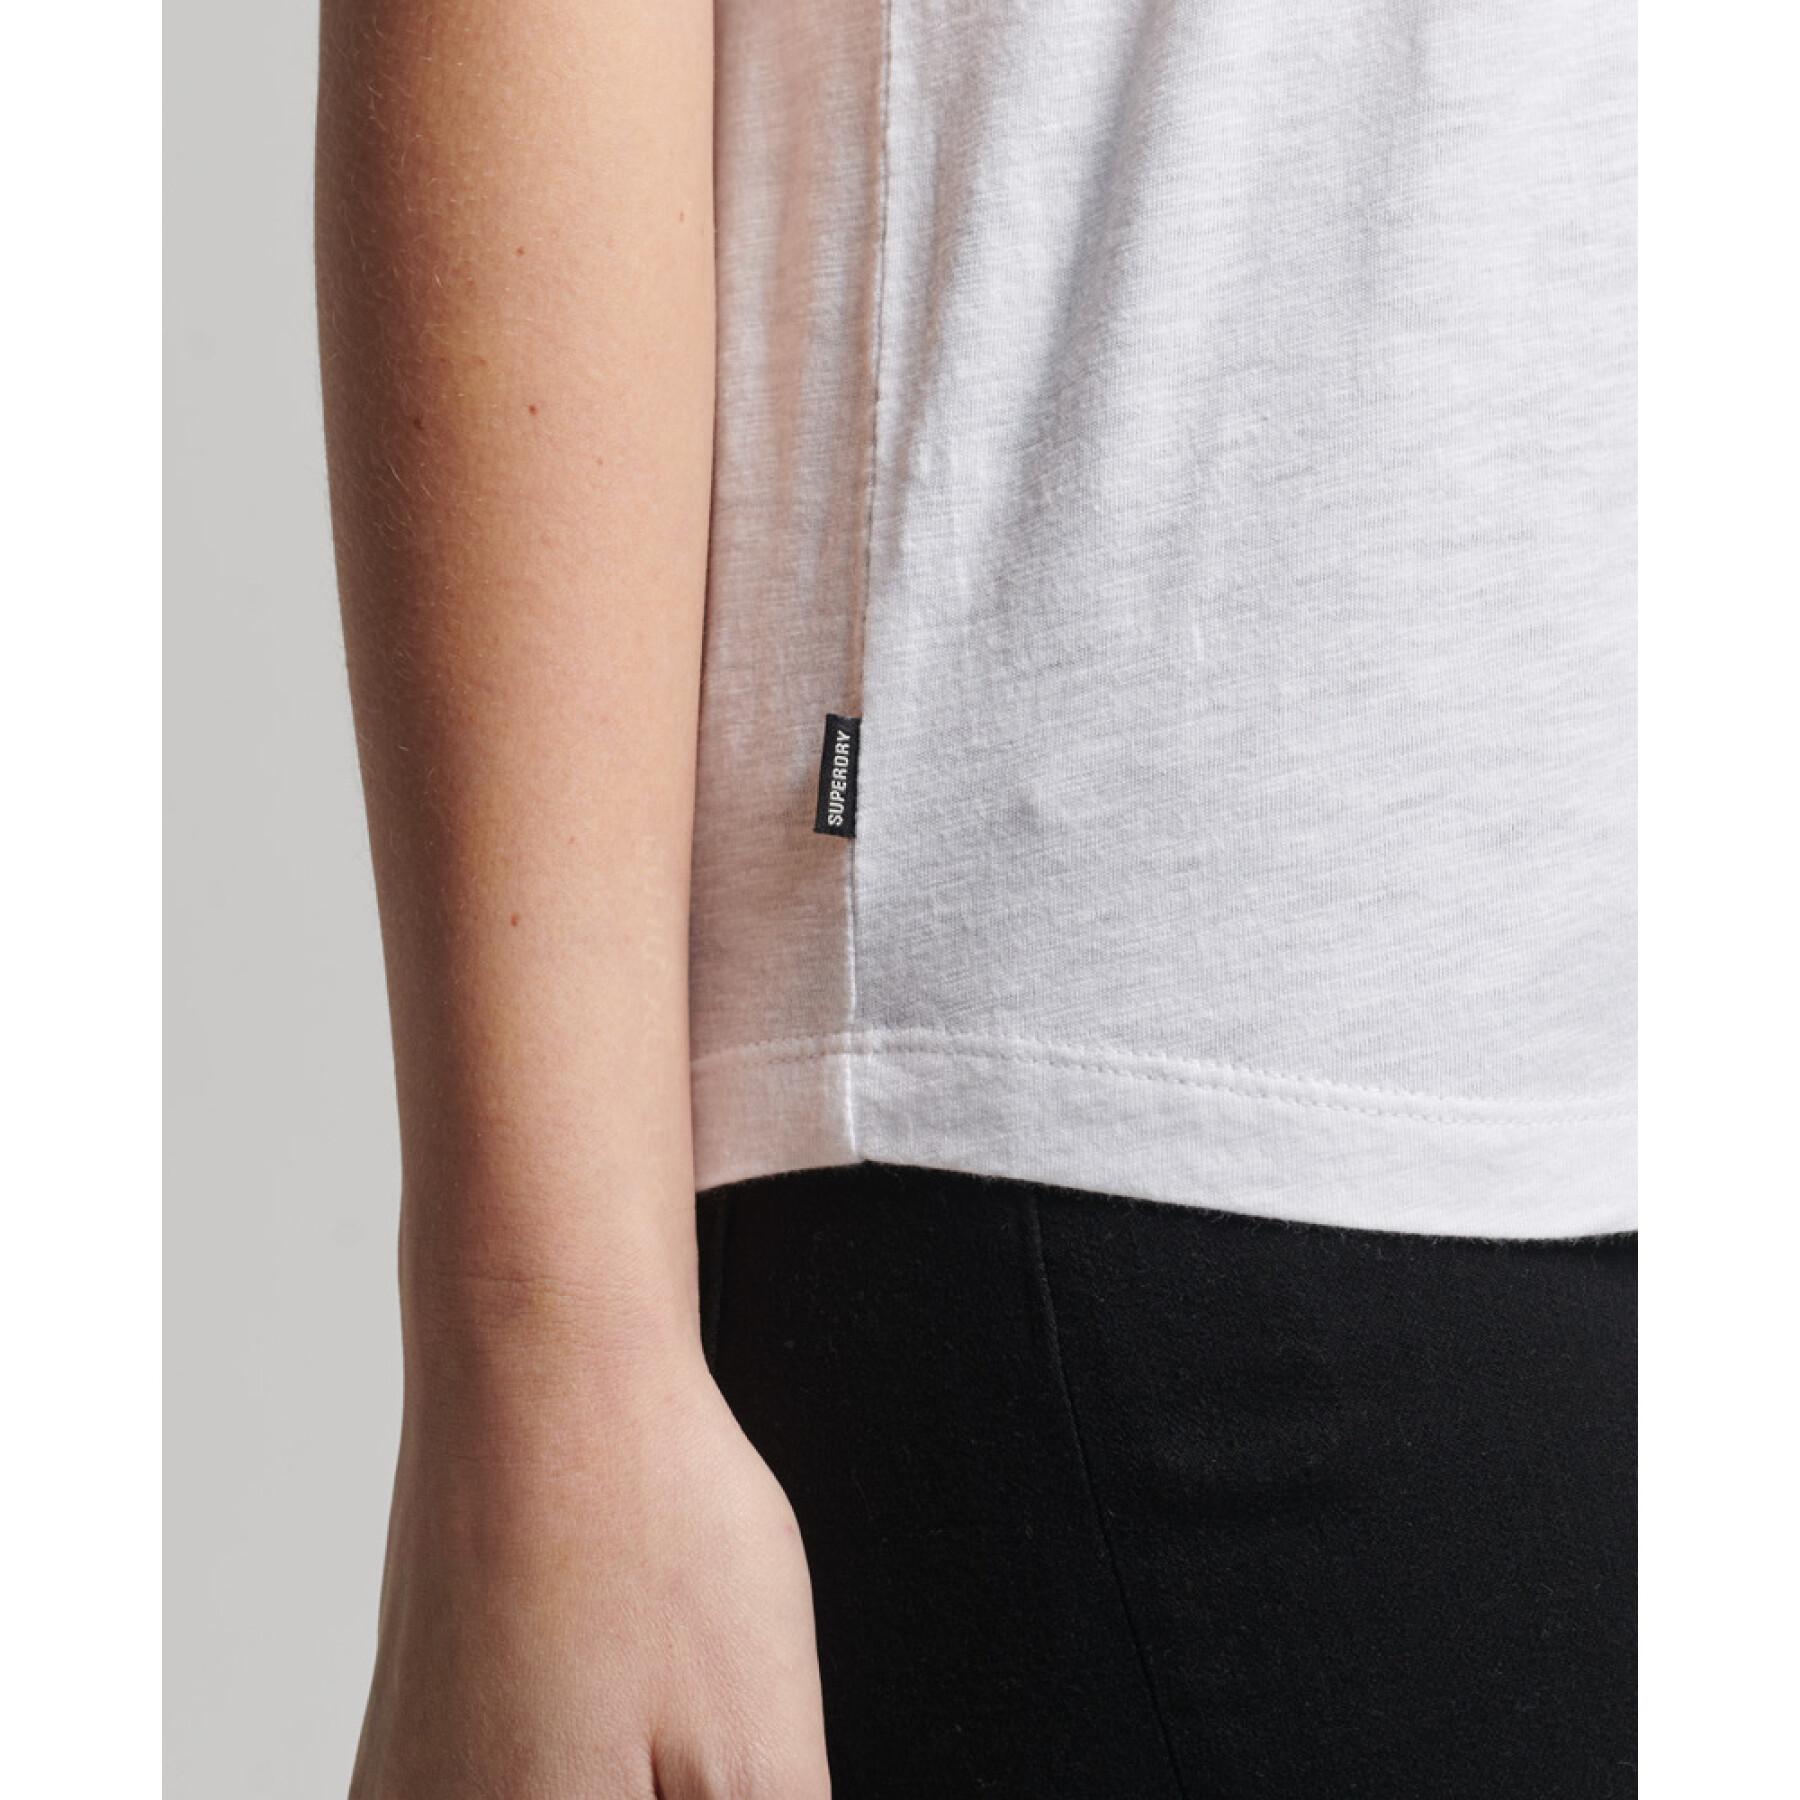 Camiseta de tirantes de algodón orgánico para mujer con bolsillo Superdry Studios